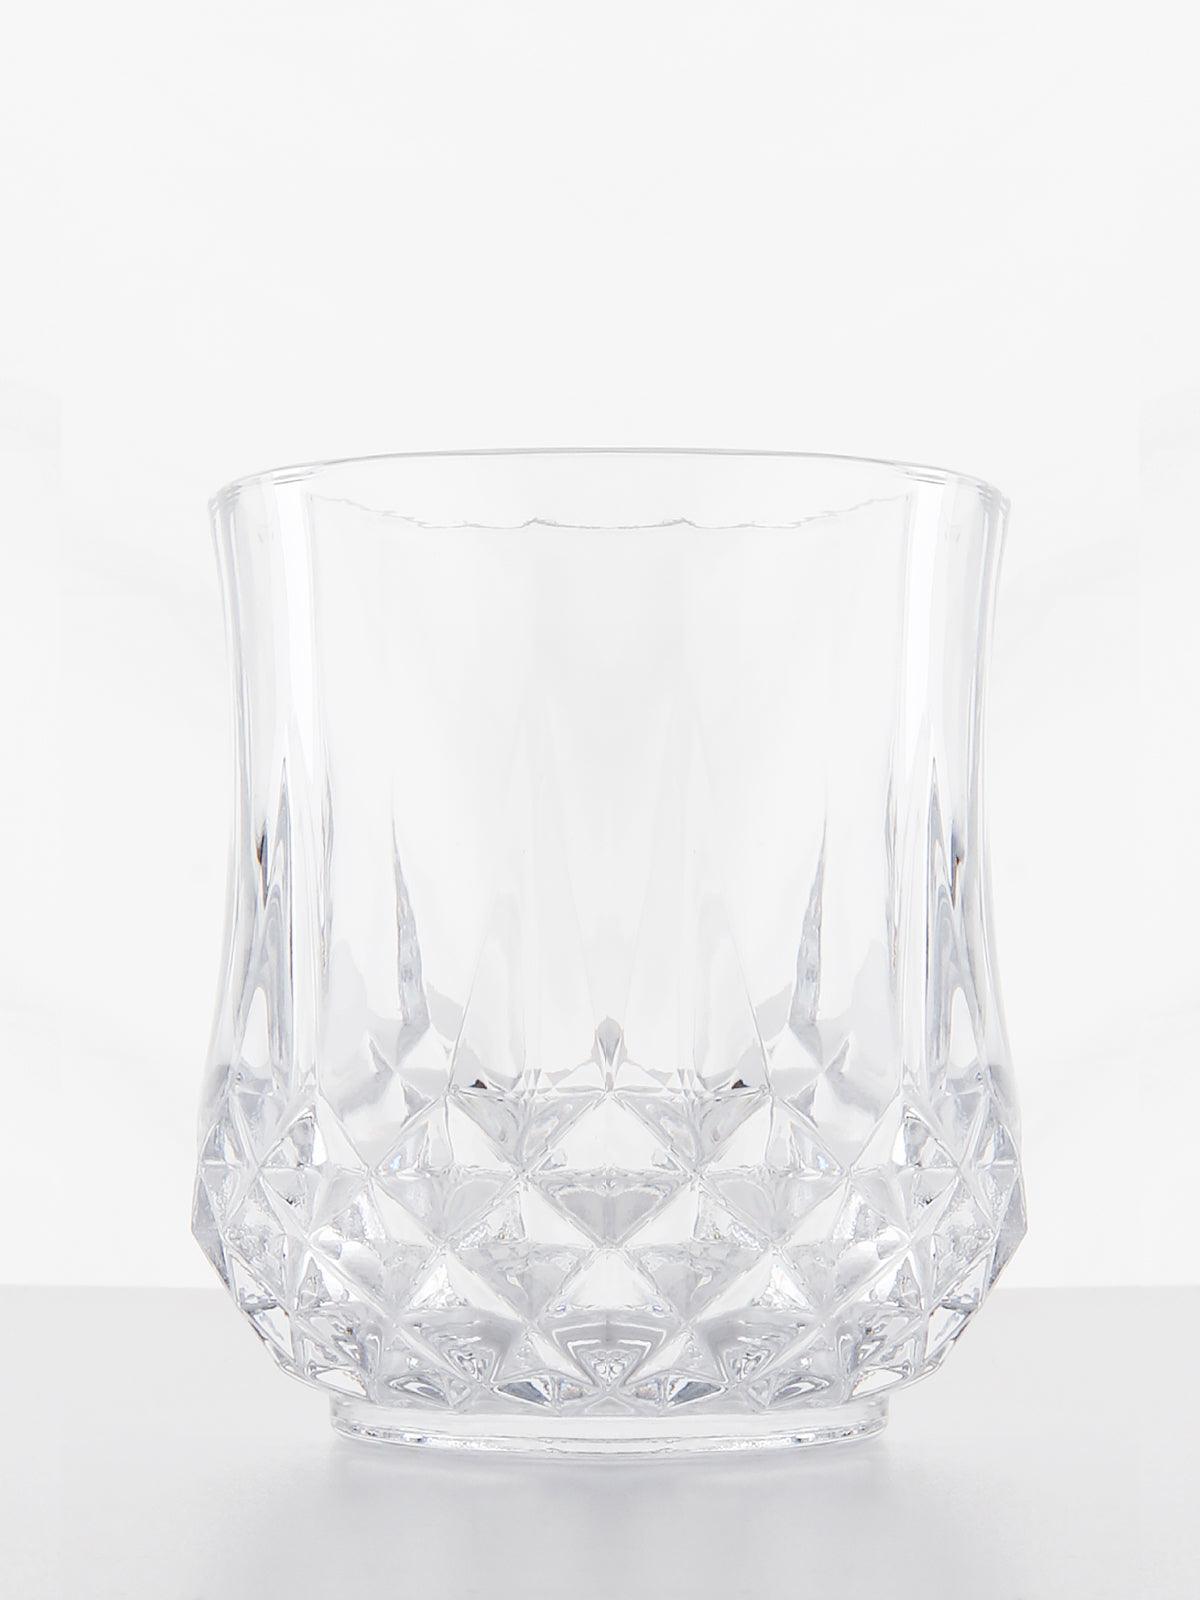 Set of 5 Crystal Whisky Glasses With Decanter - Odette